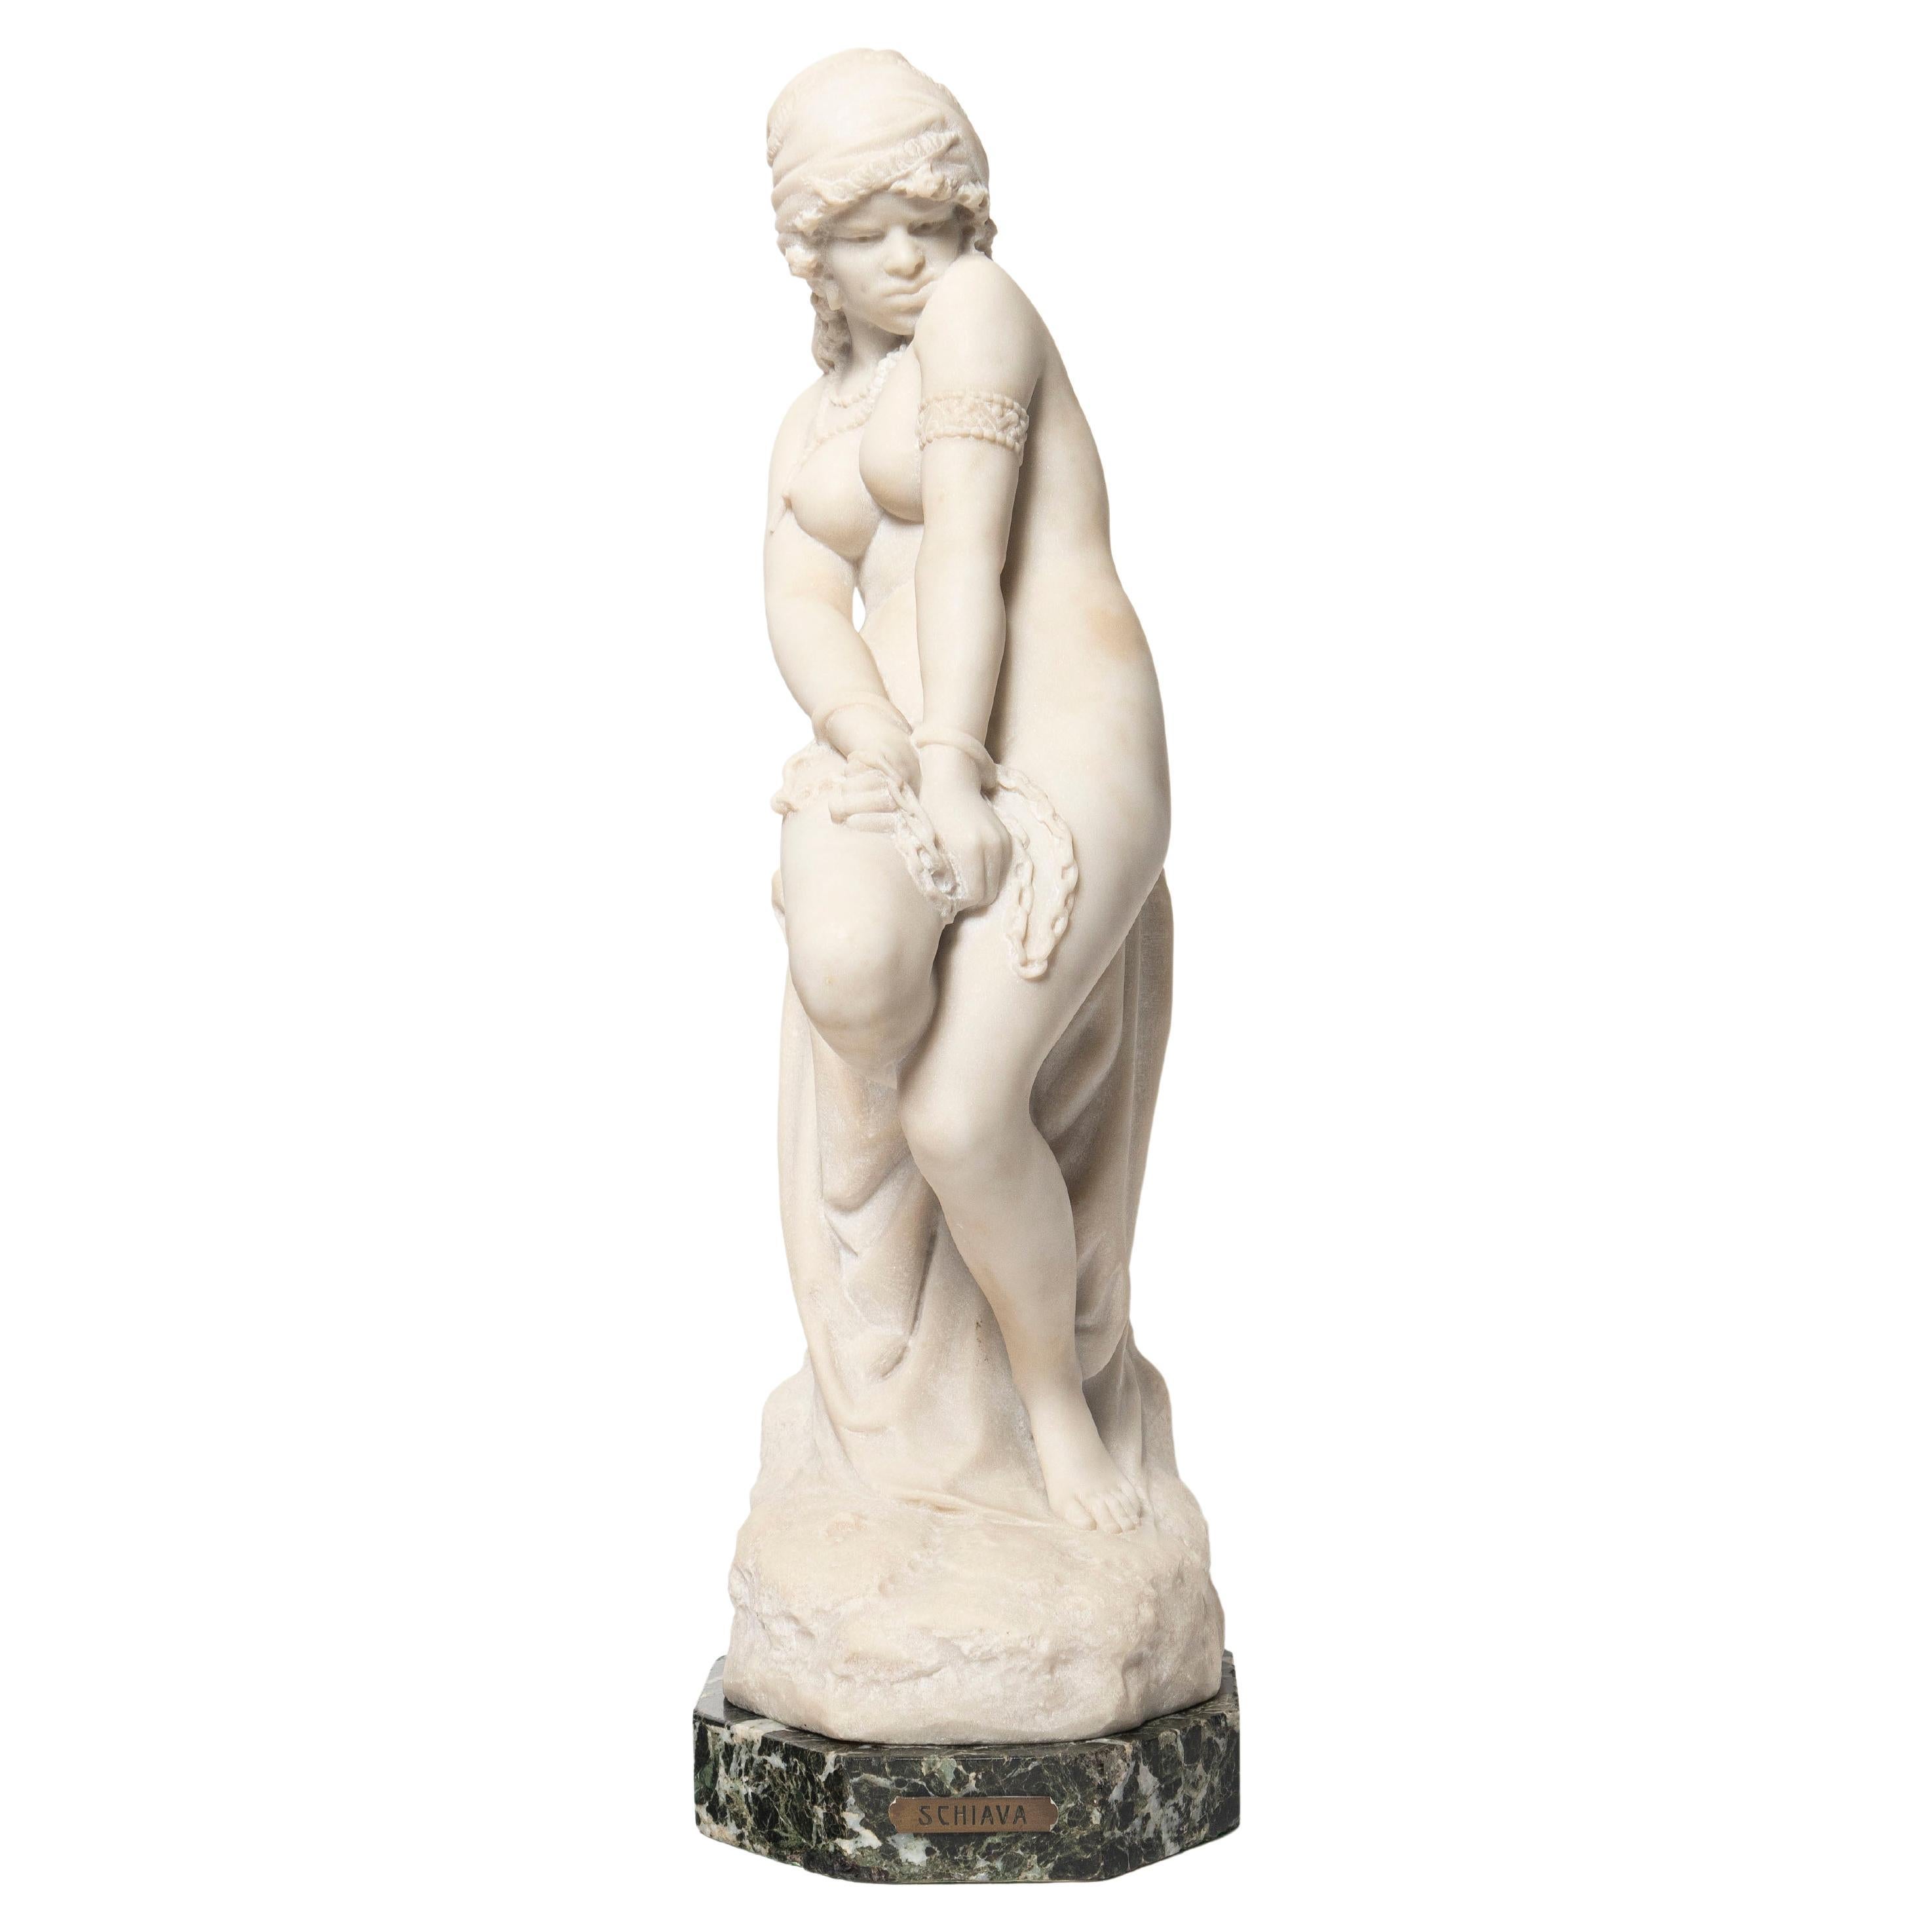 Carrara Marble Sculpture "Schiava" Attributed to Giacomo Ginotti, Italy, C. 1890 For Sale